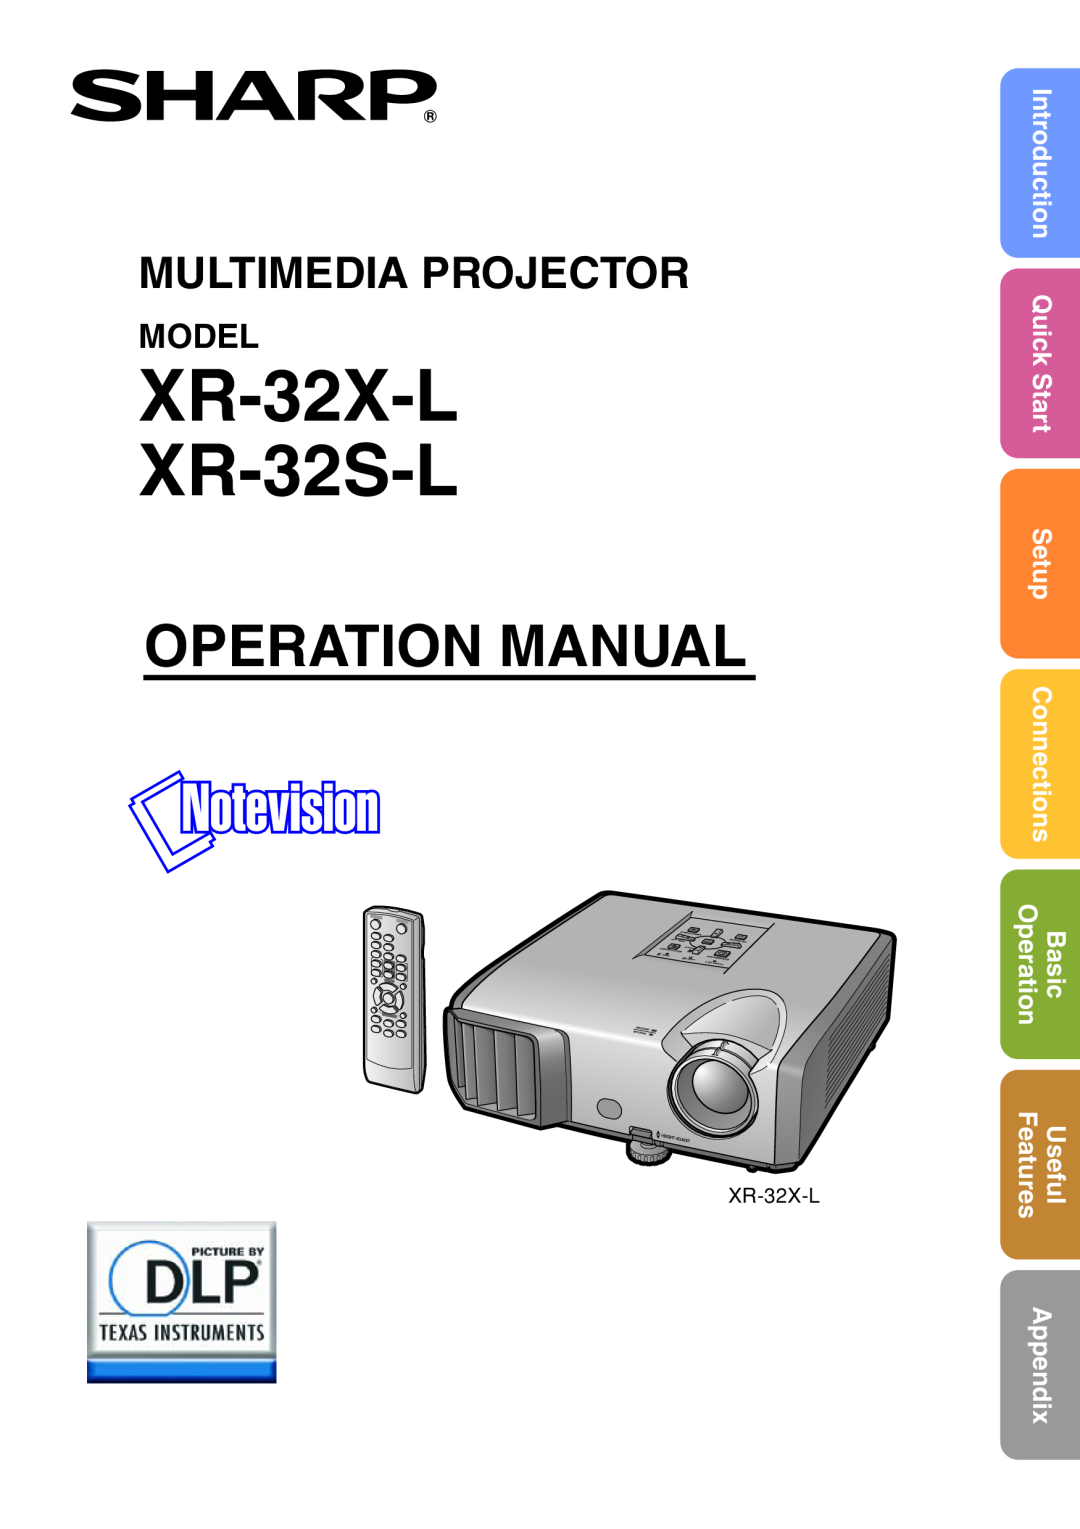 Sharp quick start XR-32X-L XR-32S-L, Operation Manual, Multimedia Projector, Model, Setup, Features, Appendix, Basic 